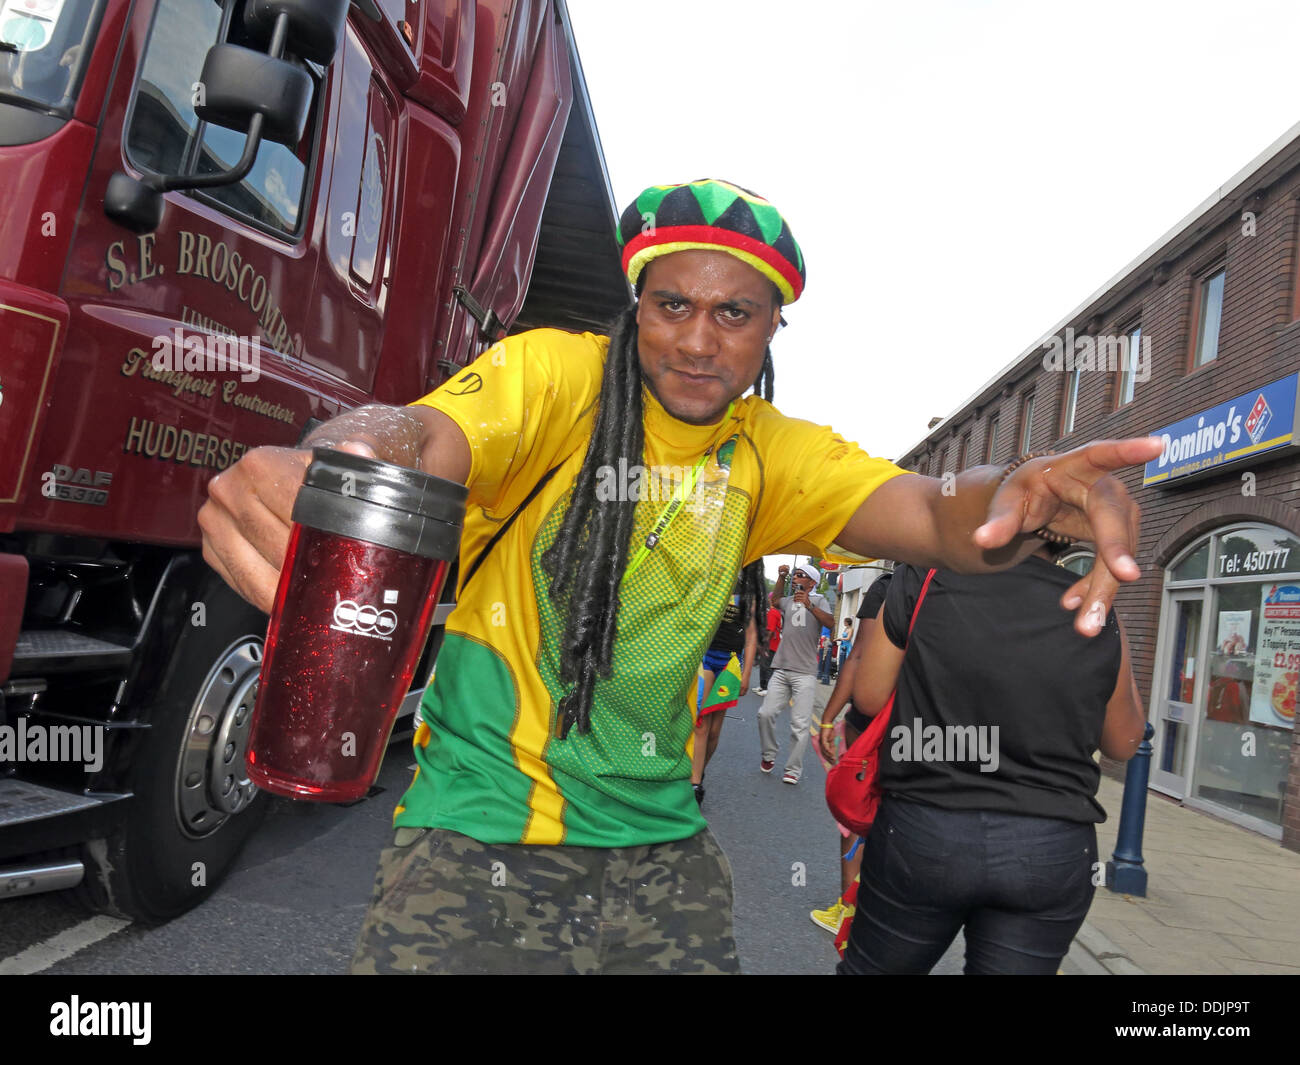 Kostümierte Tänzer mit Hut aus Huddersfield Karneval 2013 Afrika Karibik Parade Straßenfest Stockfoto